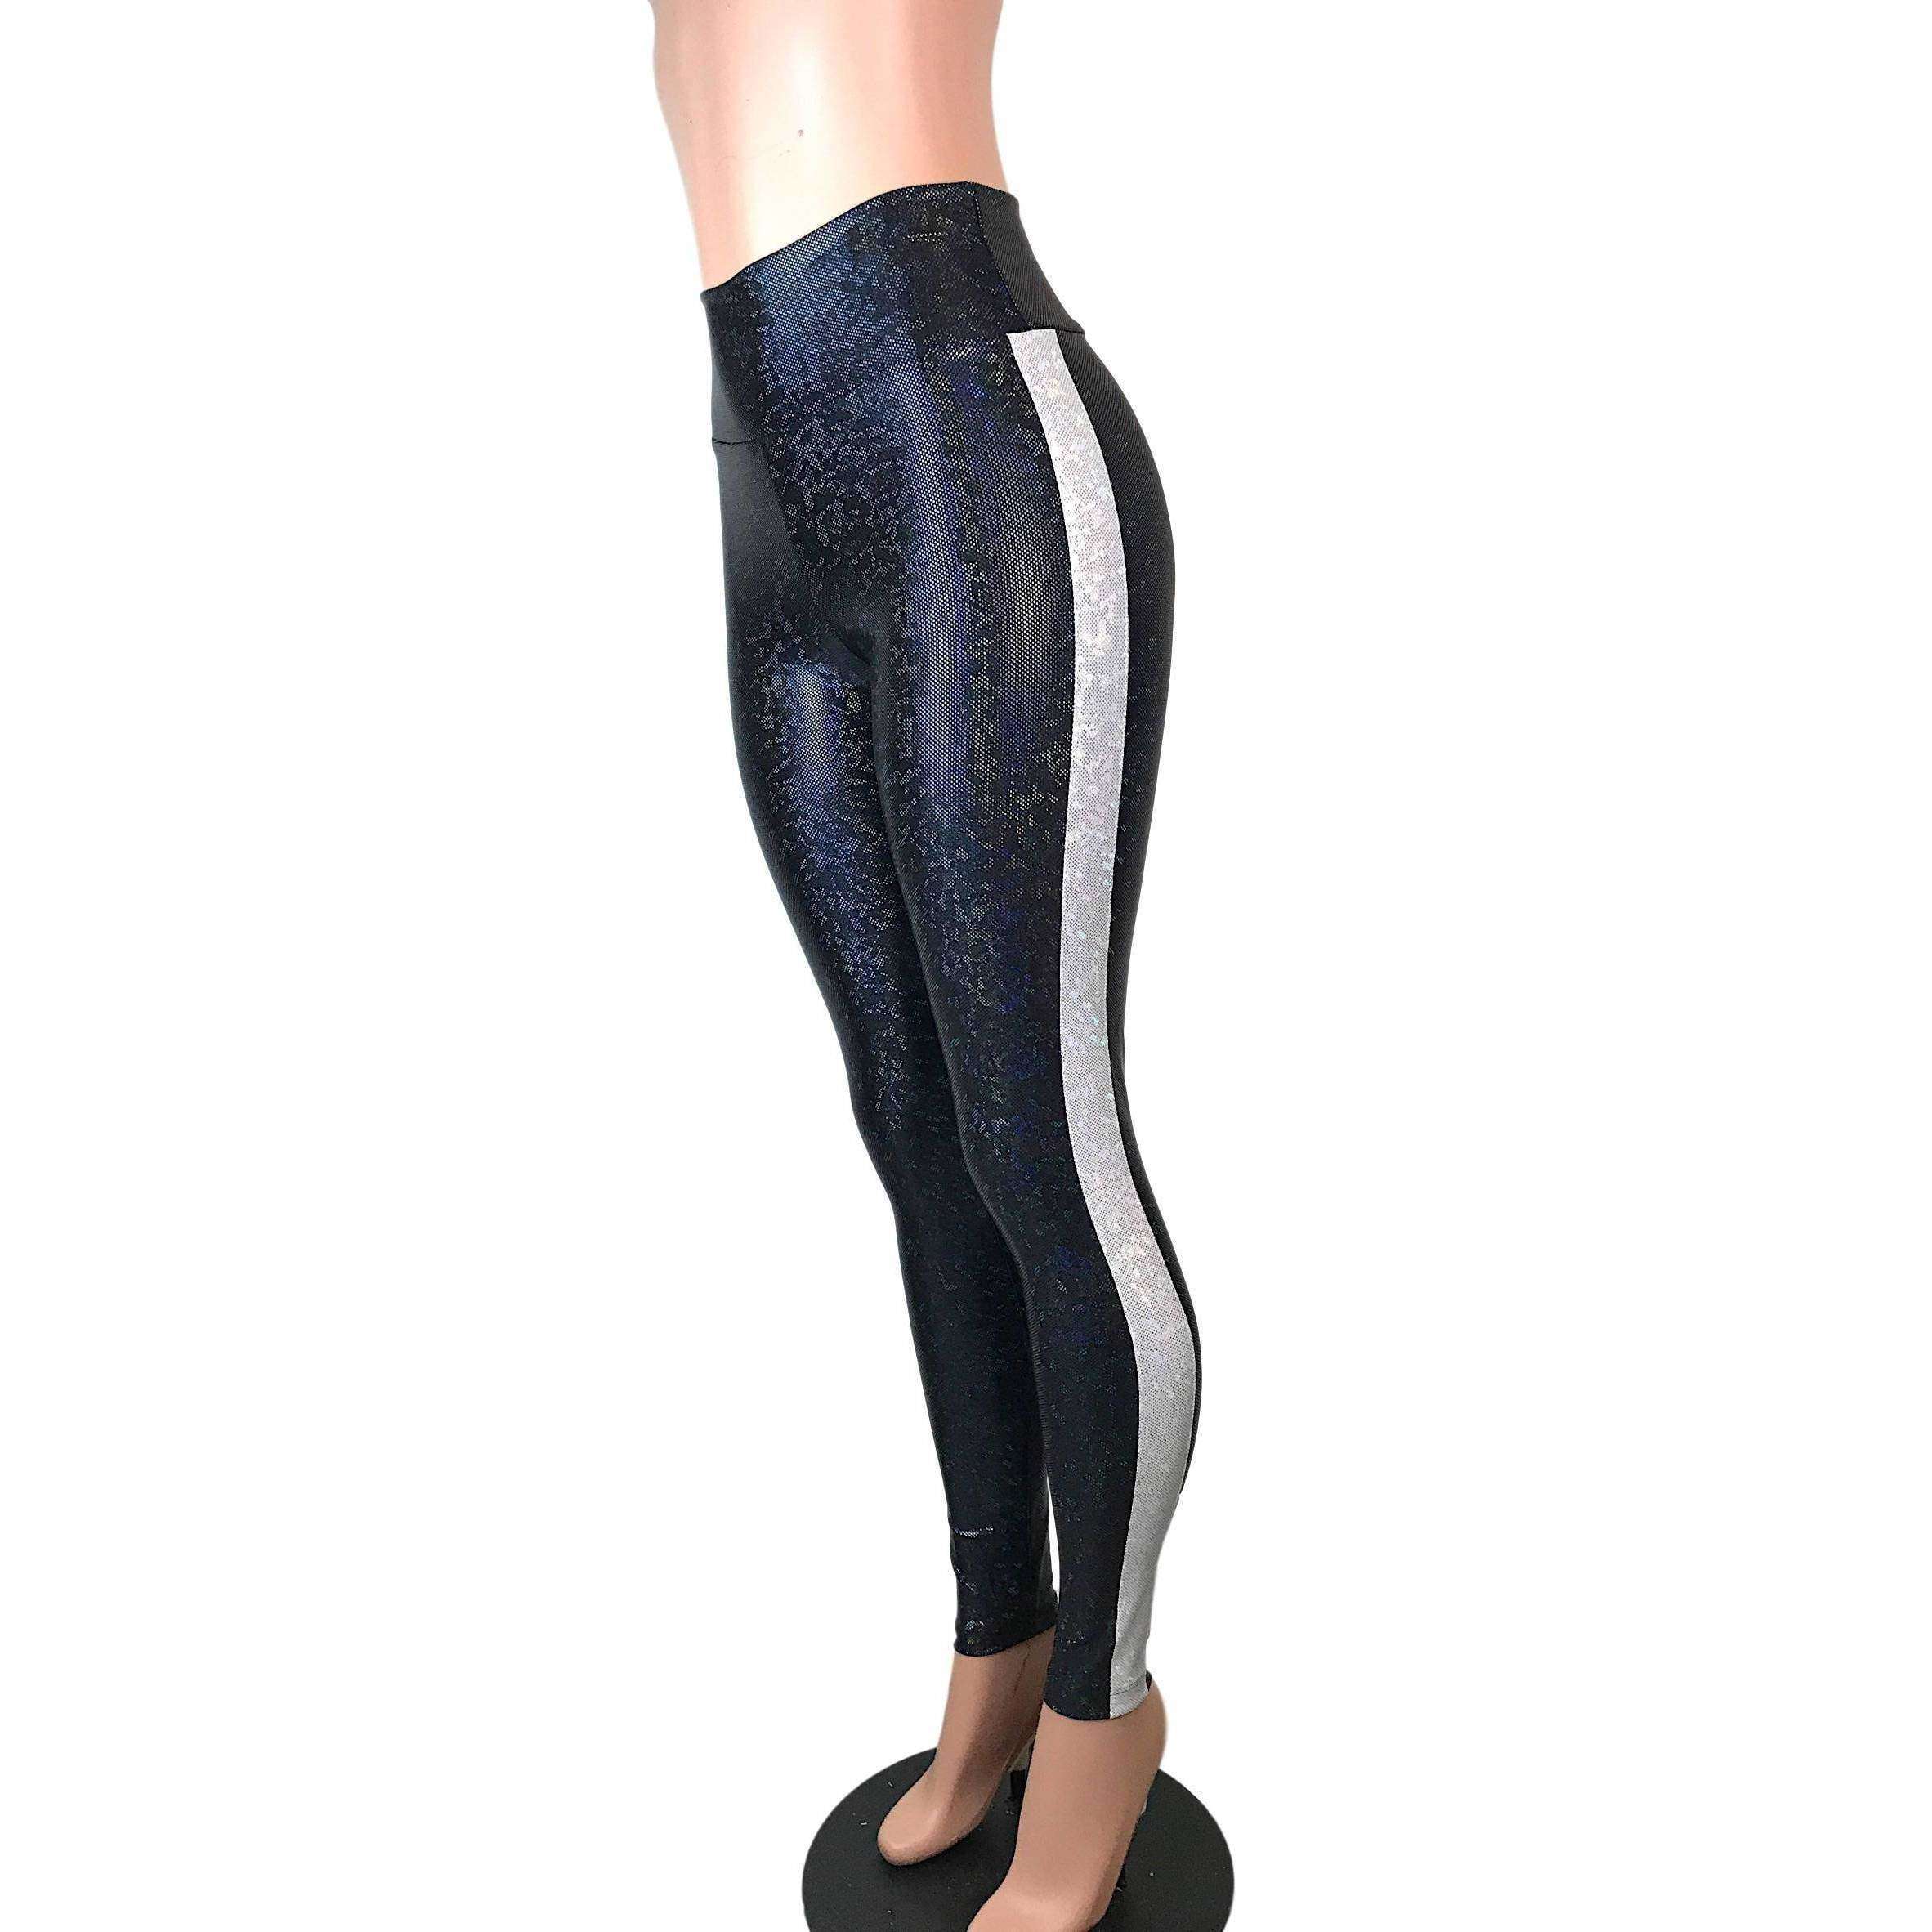 Black w/ Silver Stripe Shattered Glass Holographic Leggings Pants